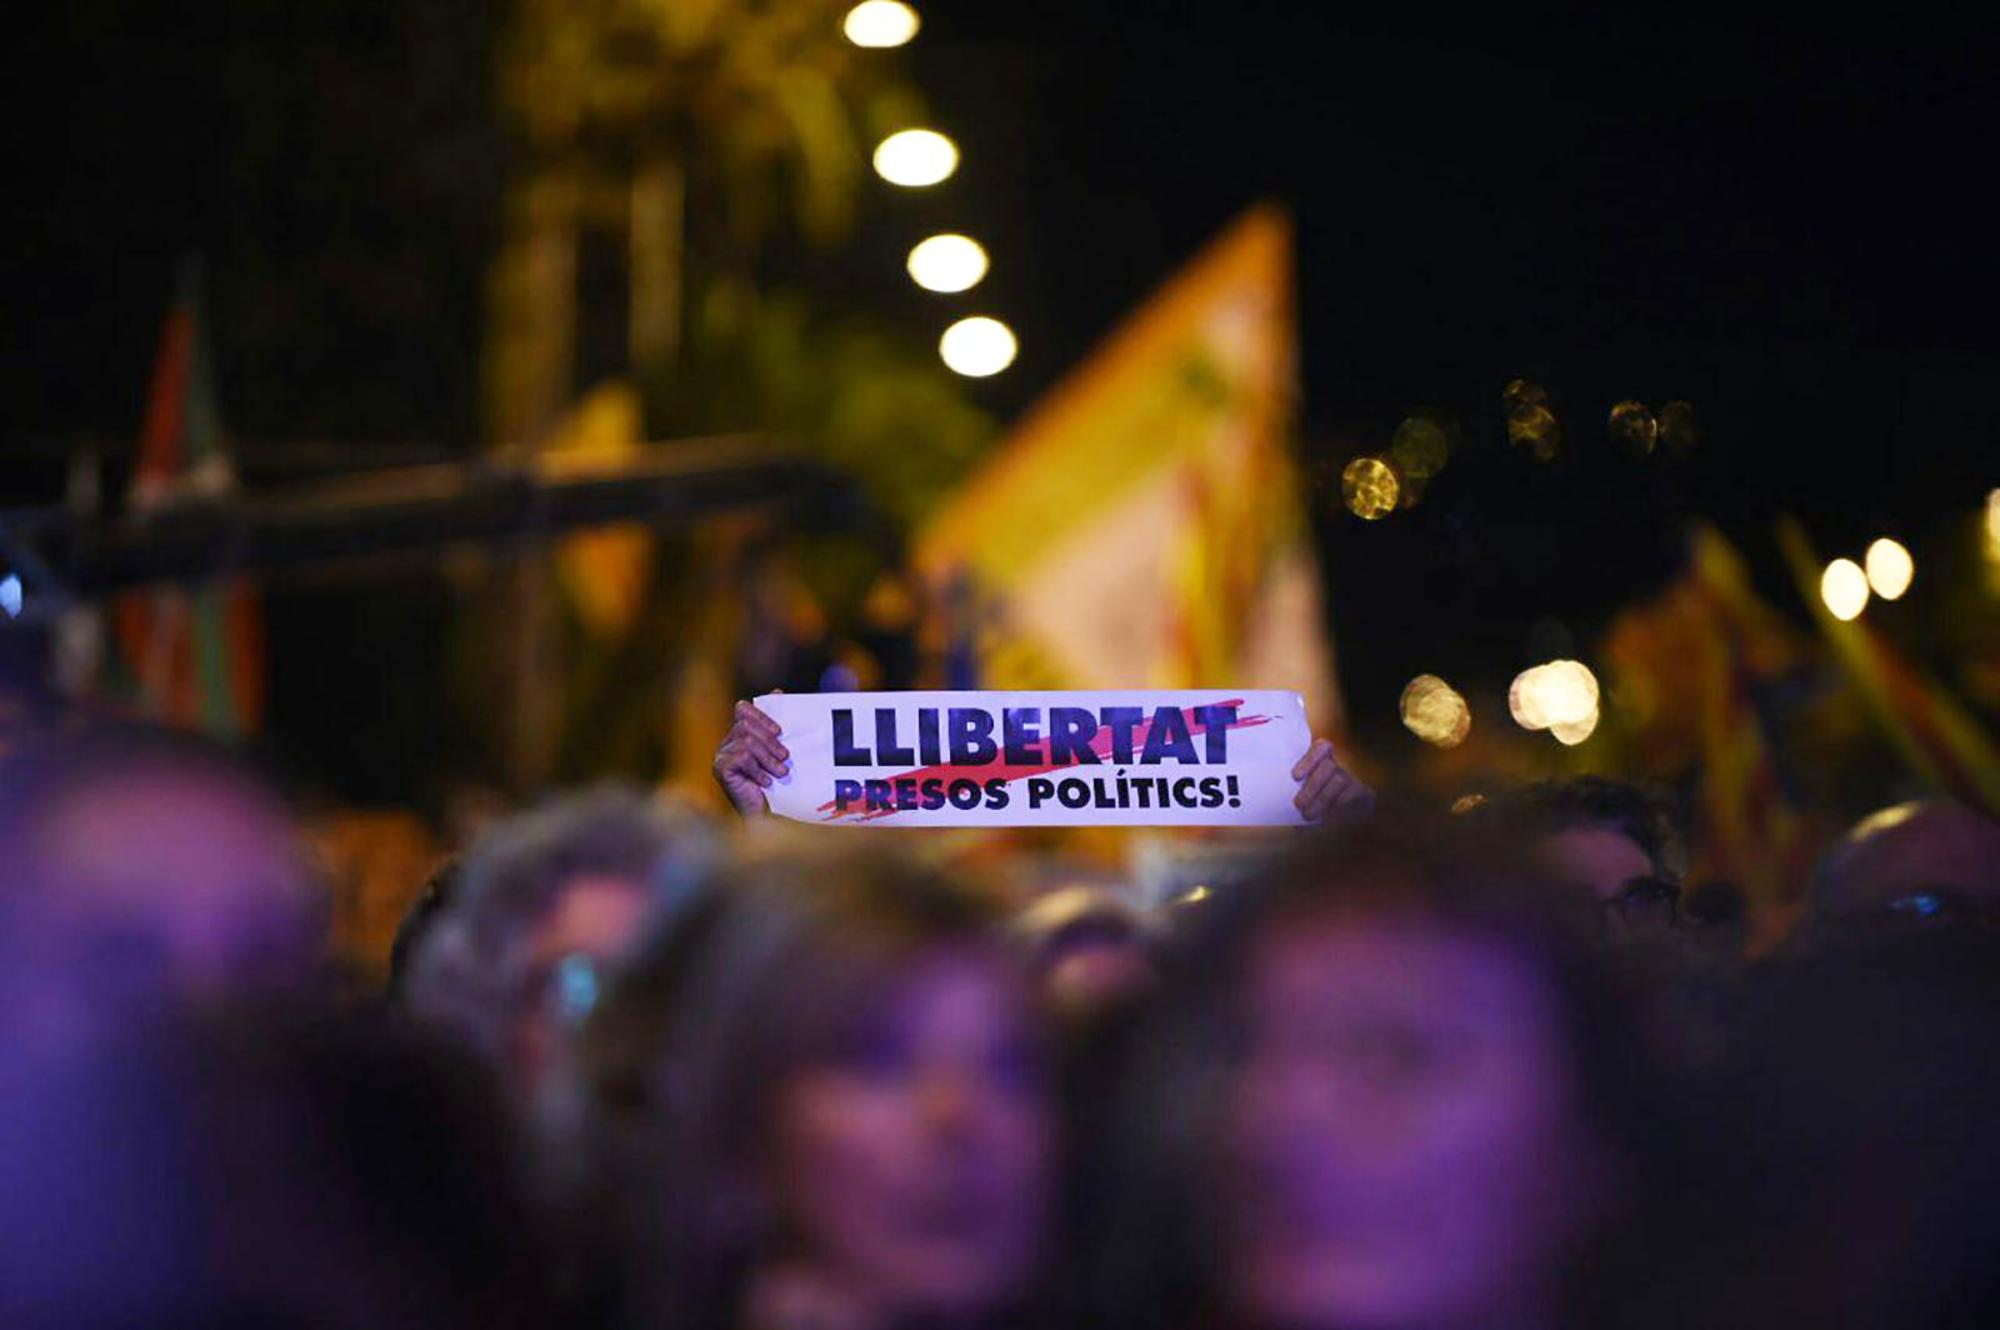 Barcelona 11 de noviembre manifestacion presos politicos